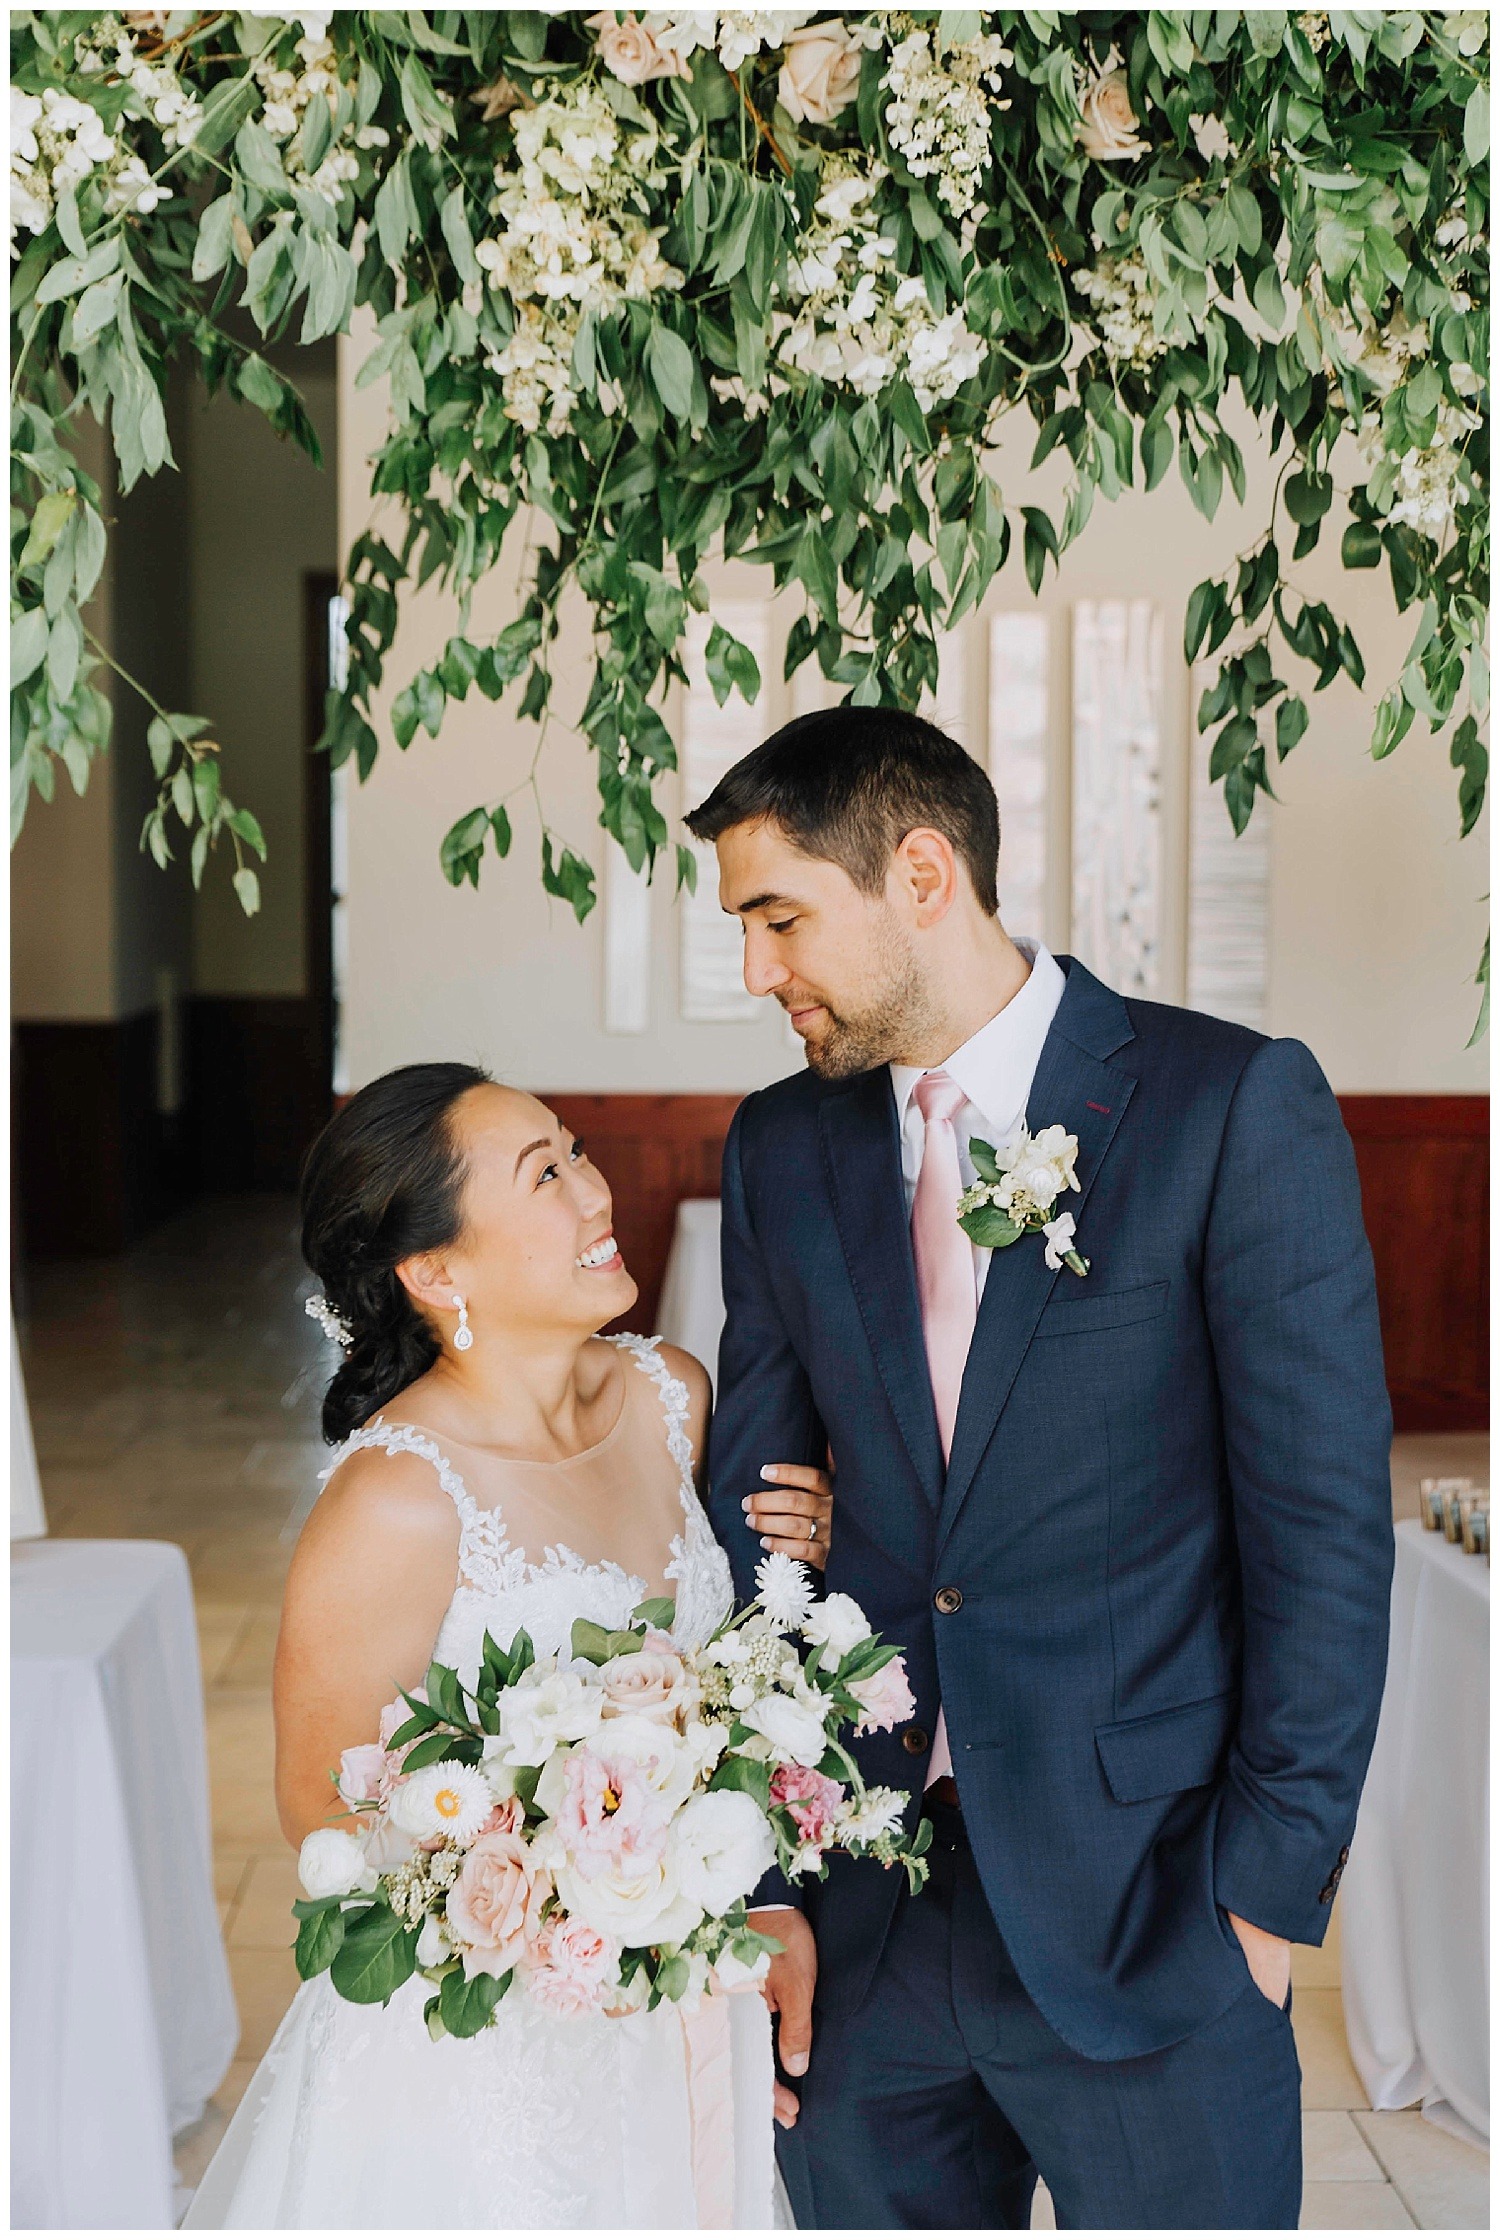 Joe + Norika | Elegant and Classic Wedding | Ohio Wedding Florist